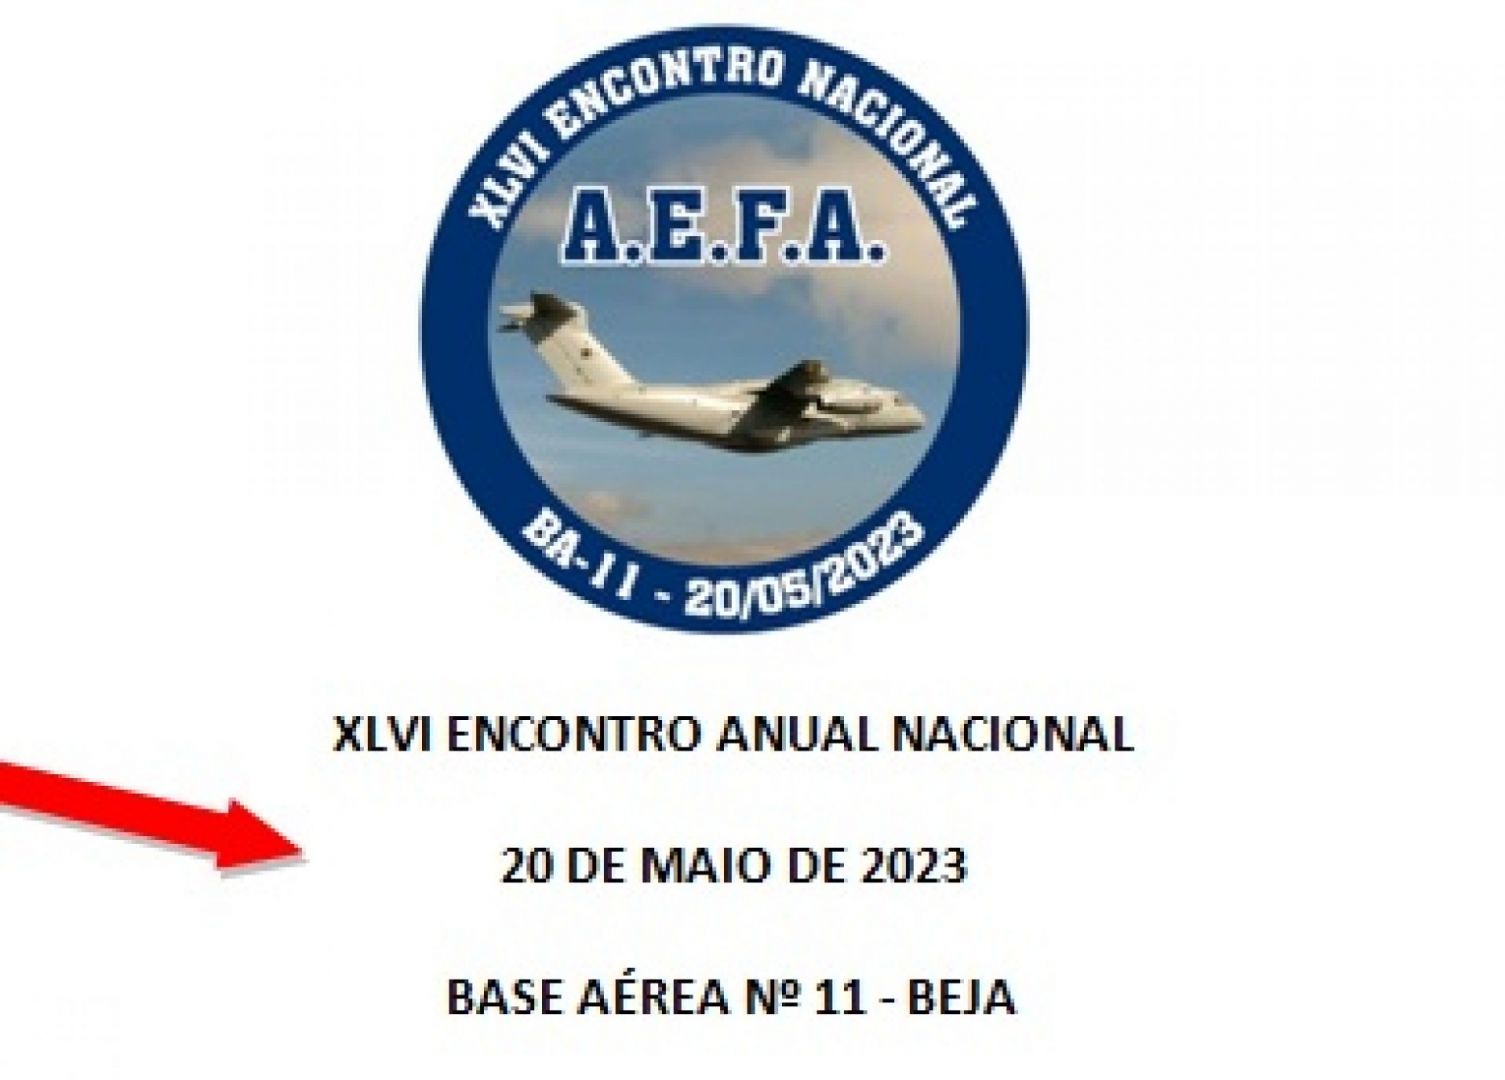 XLVI ENCONTRO ANUAL NACIONAL - 20 Maio 2023 - Base Aérea 11, Beja